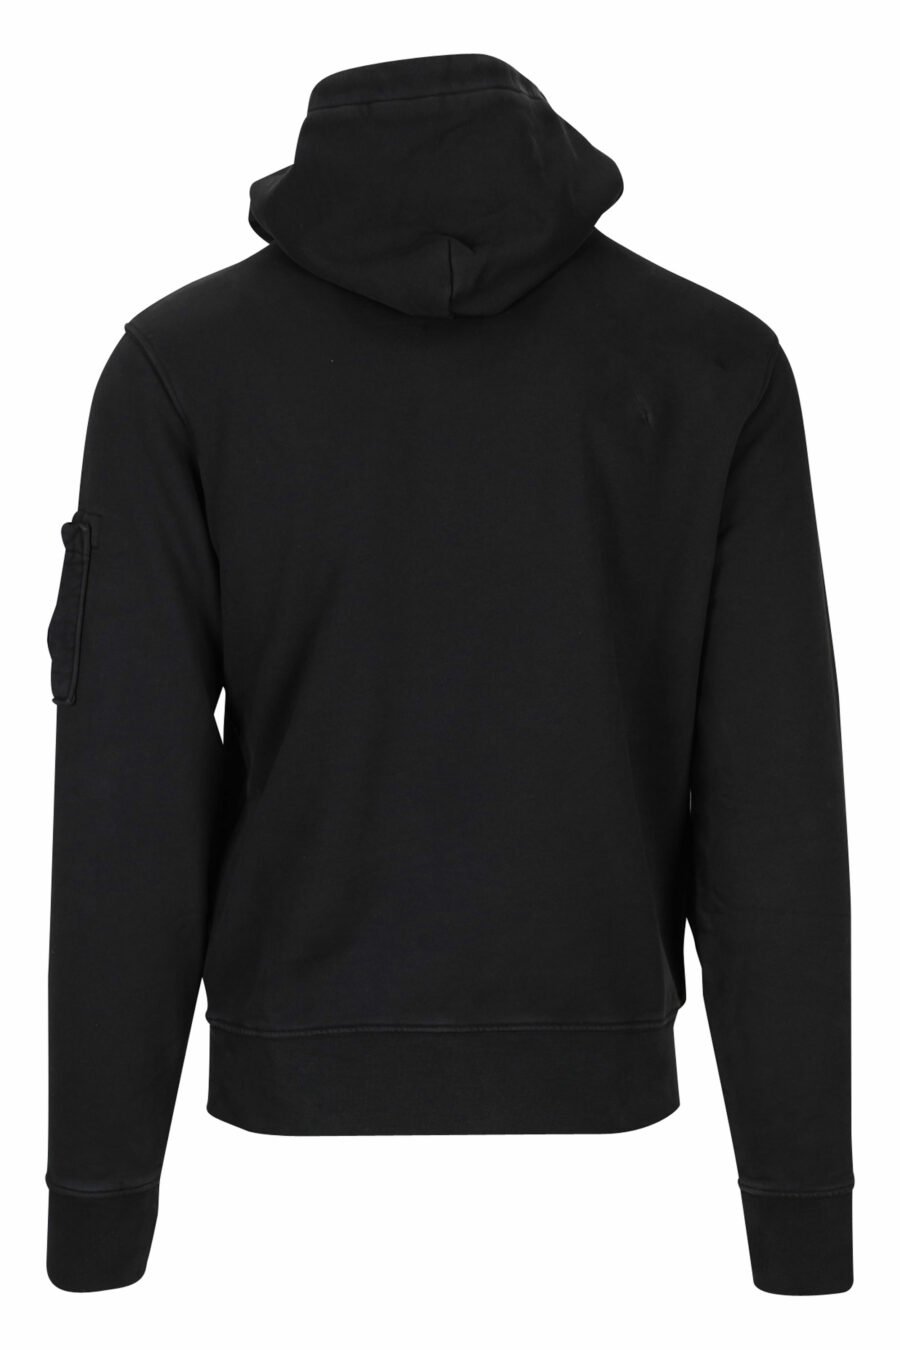 C.P. Company - Sudadera negra con capucha y logo lateral lente - BLS Fashion